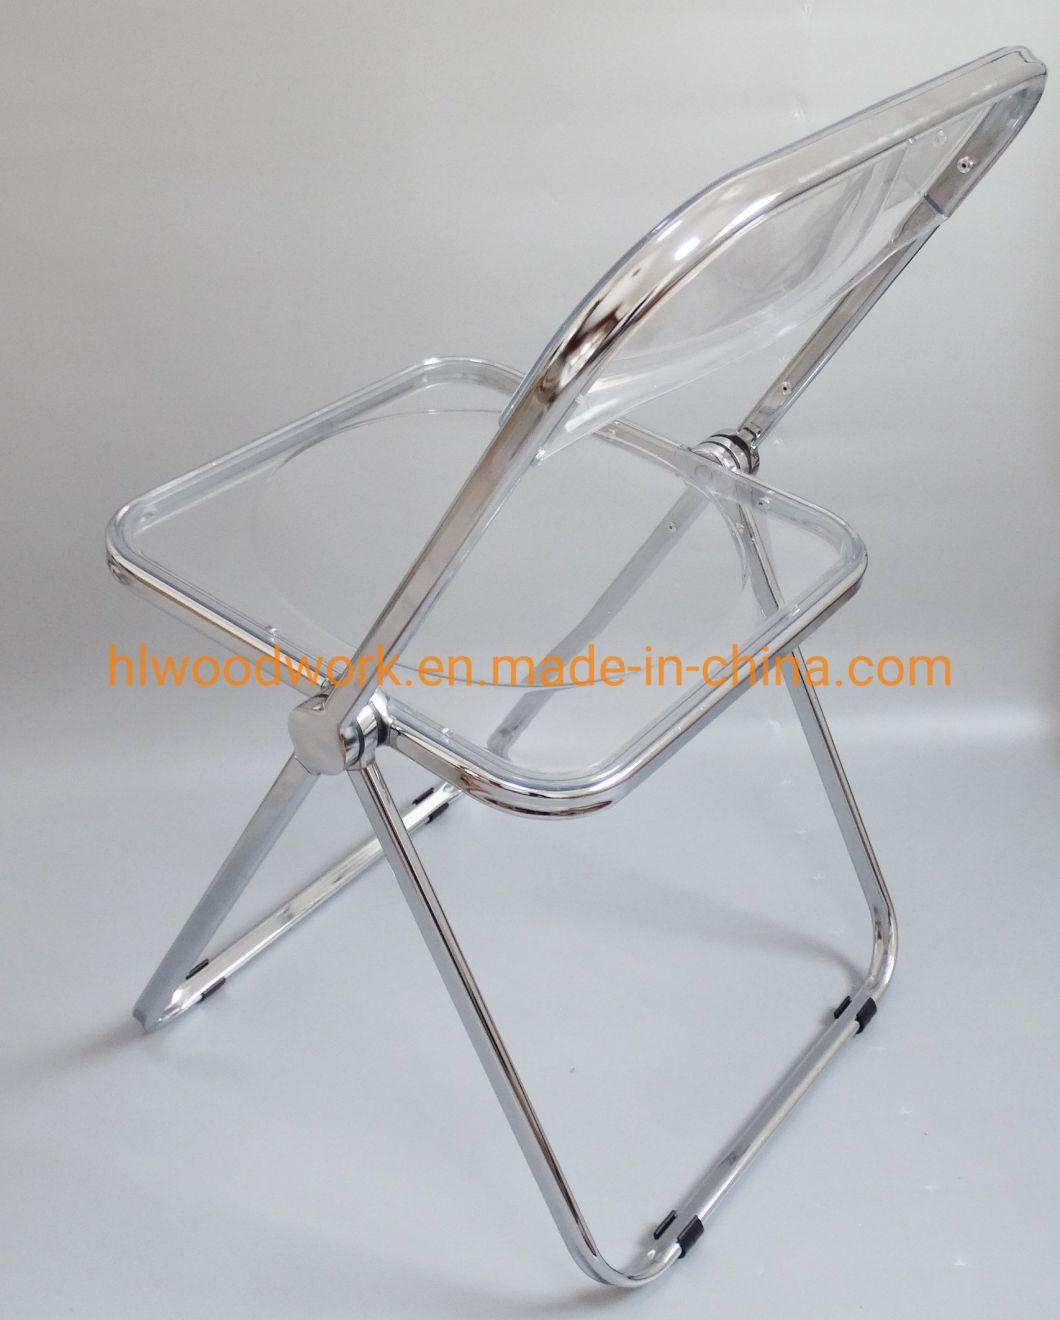 Modern Transparent Black Folding Chair PC Plastic Hotel Chairt Chrome Frame Office Bar Dining Leisure Banquet Wedding Meeting Chair Plastic Dining Chair